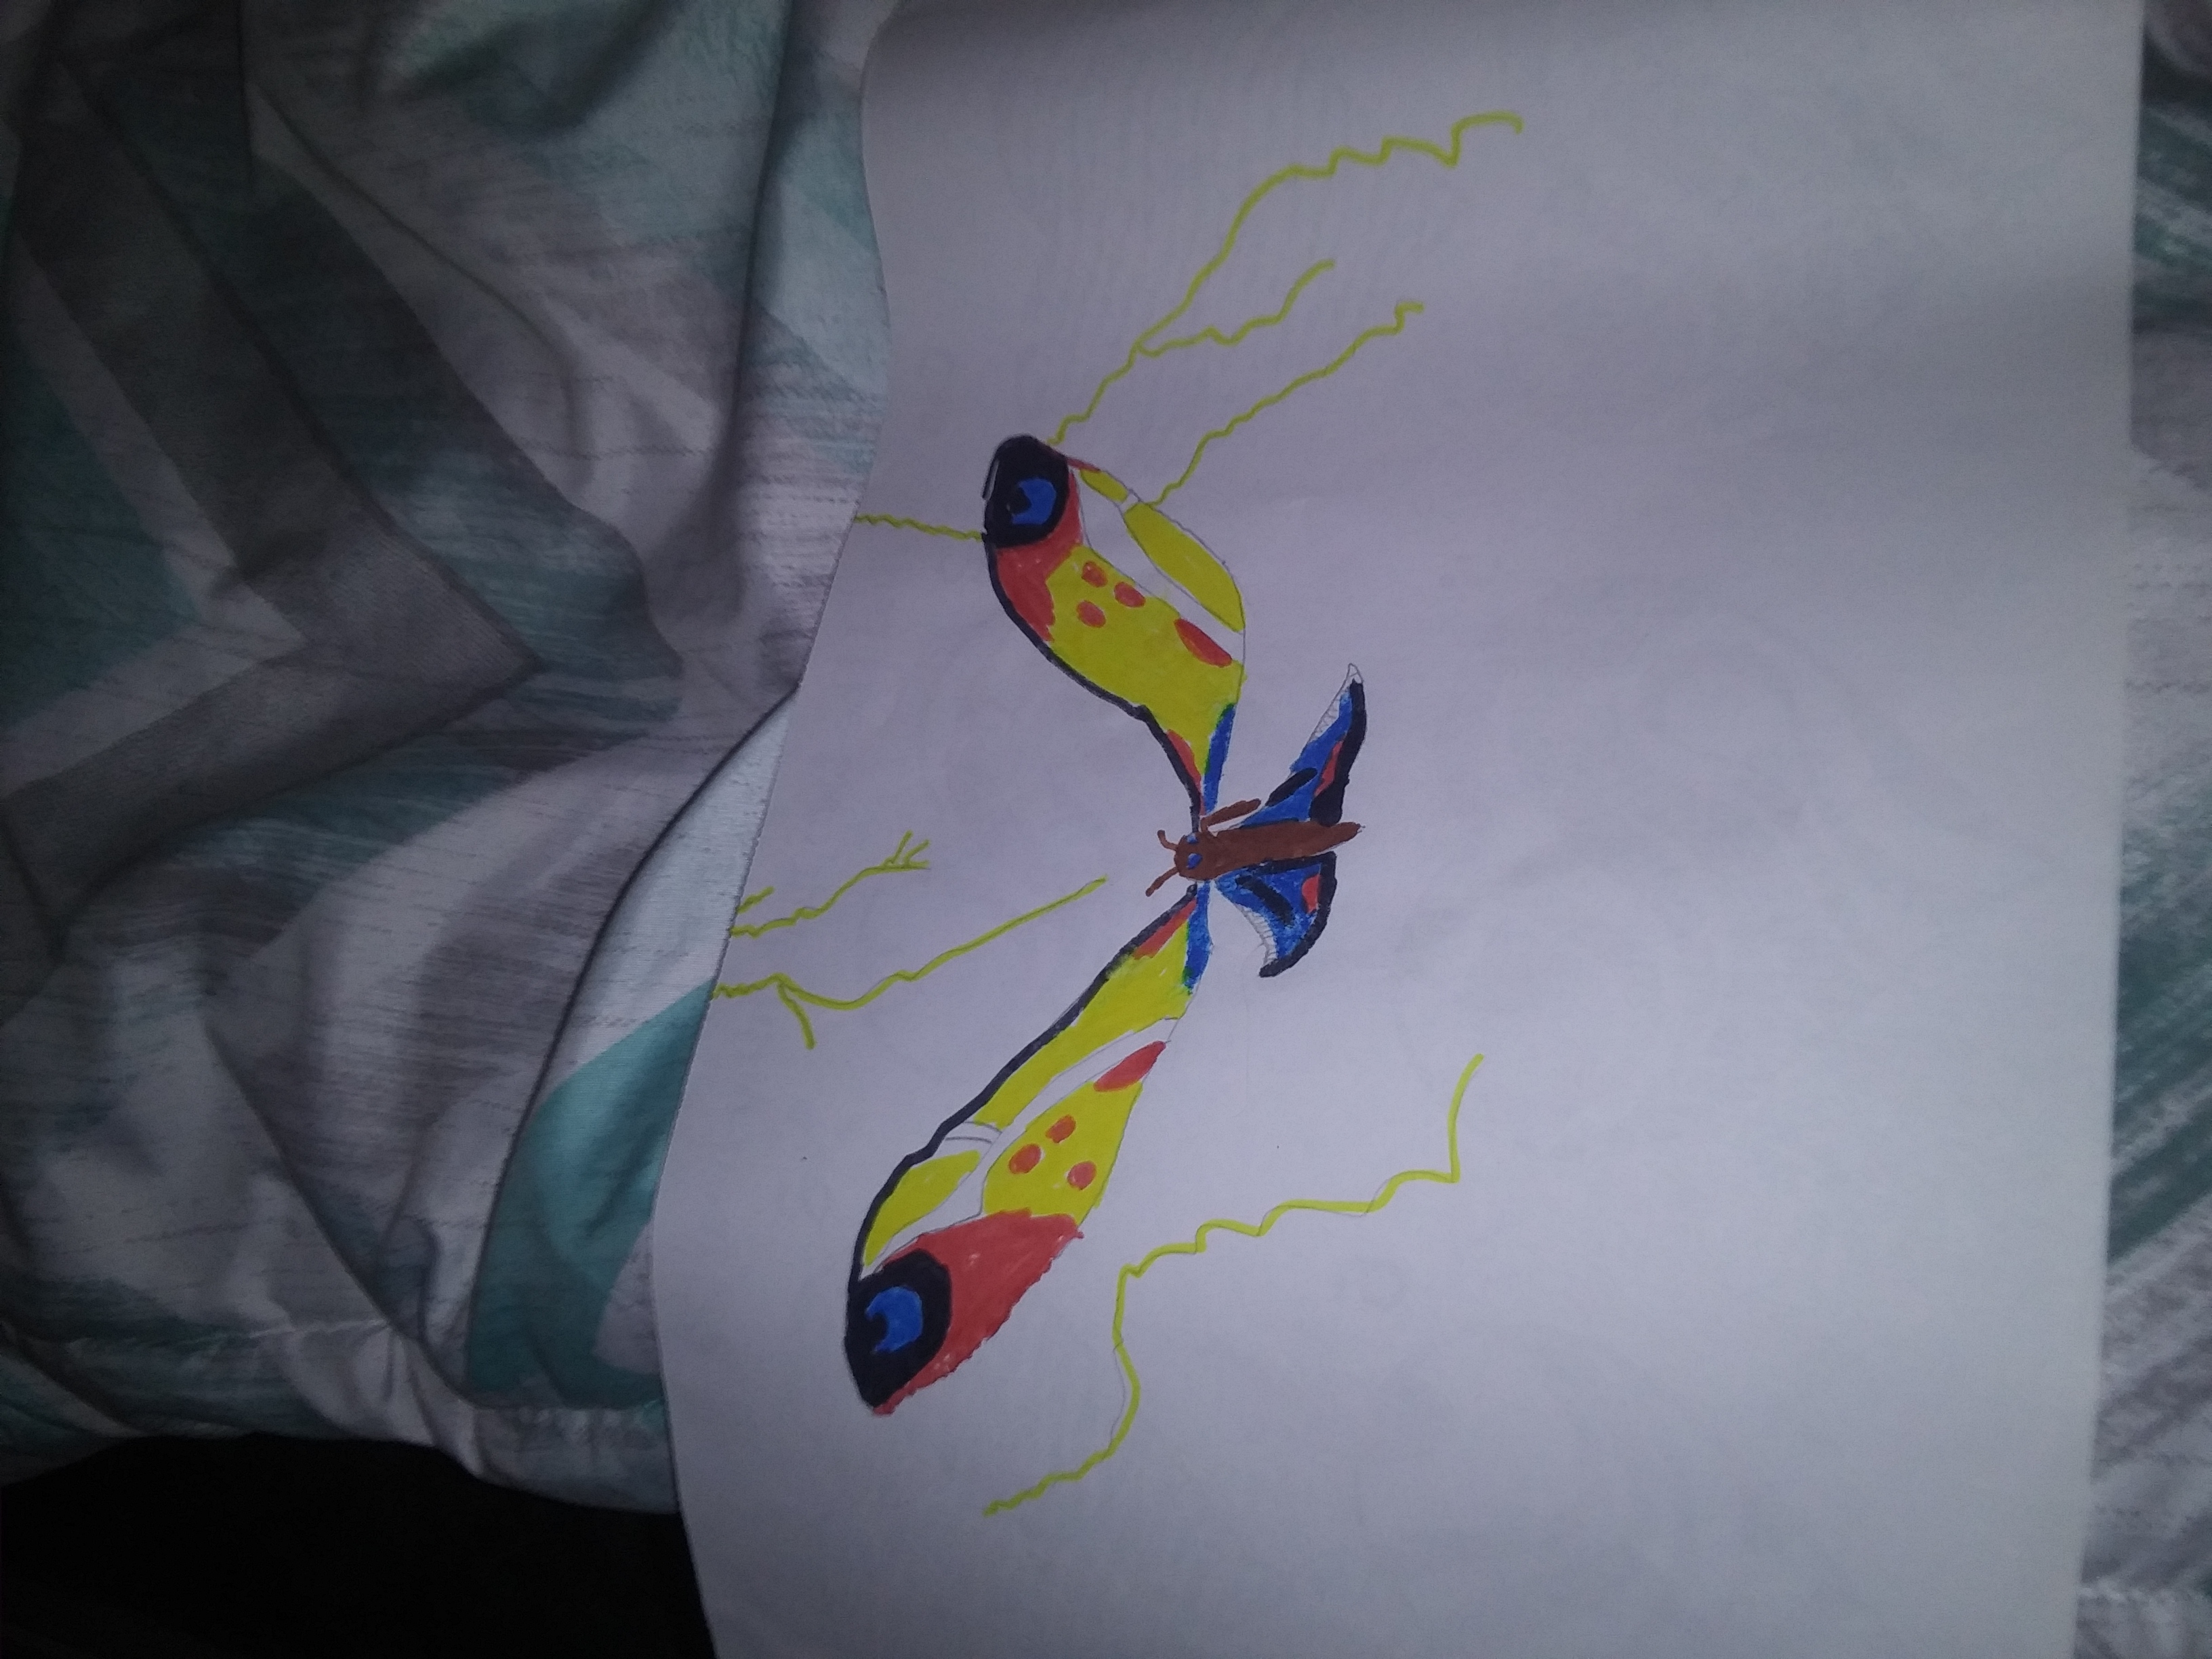 My drawing of mothra